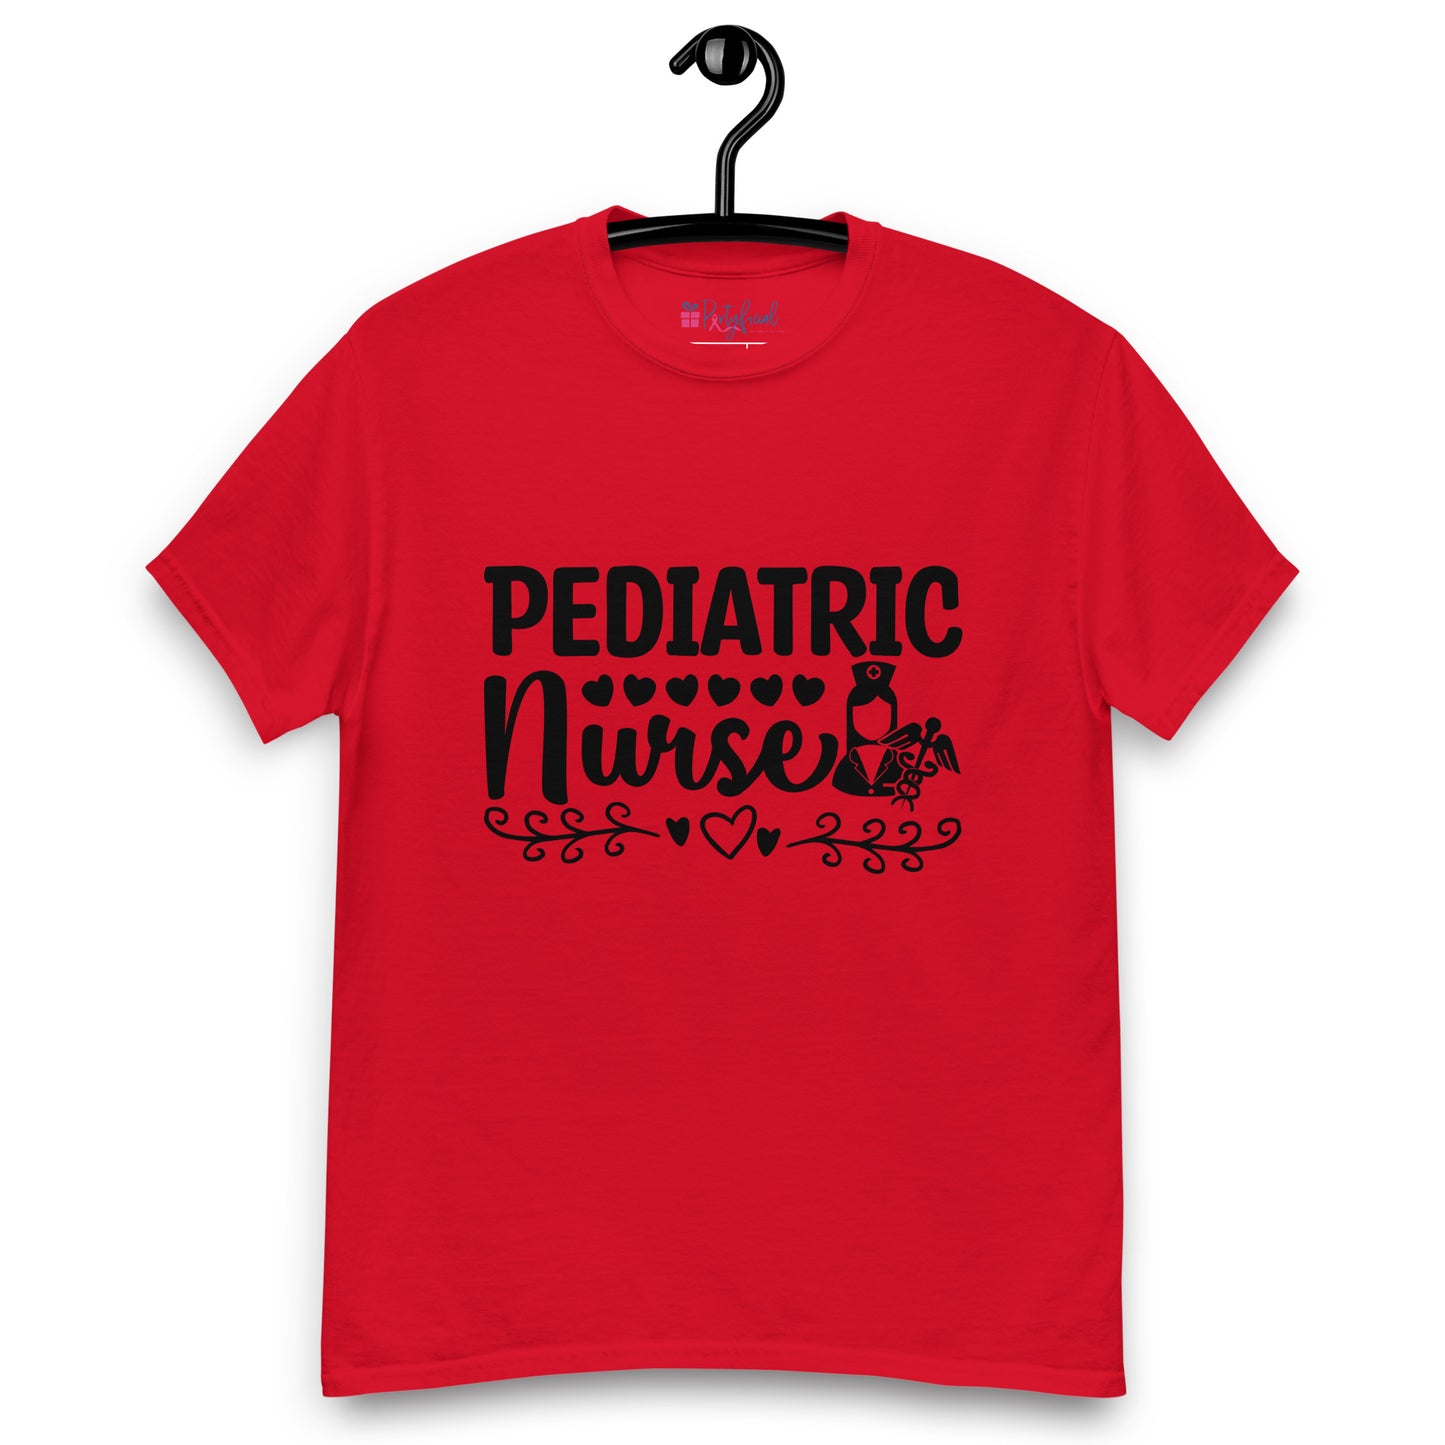 Pediatric Nurse tee